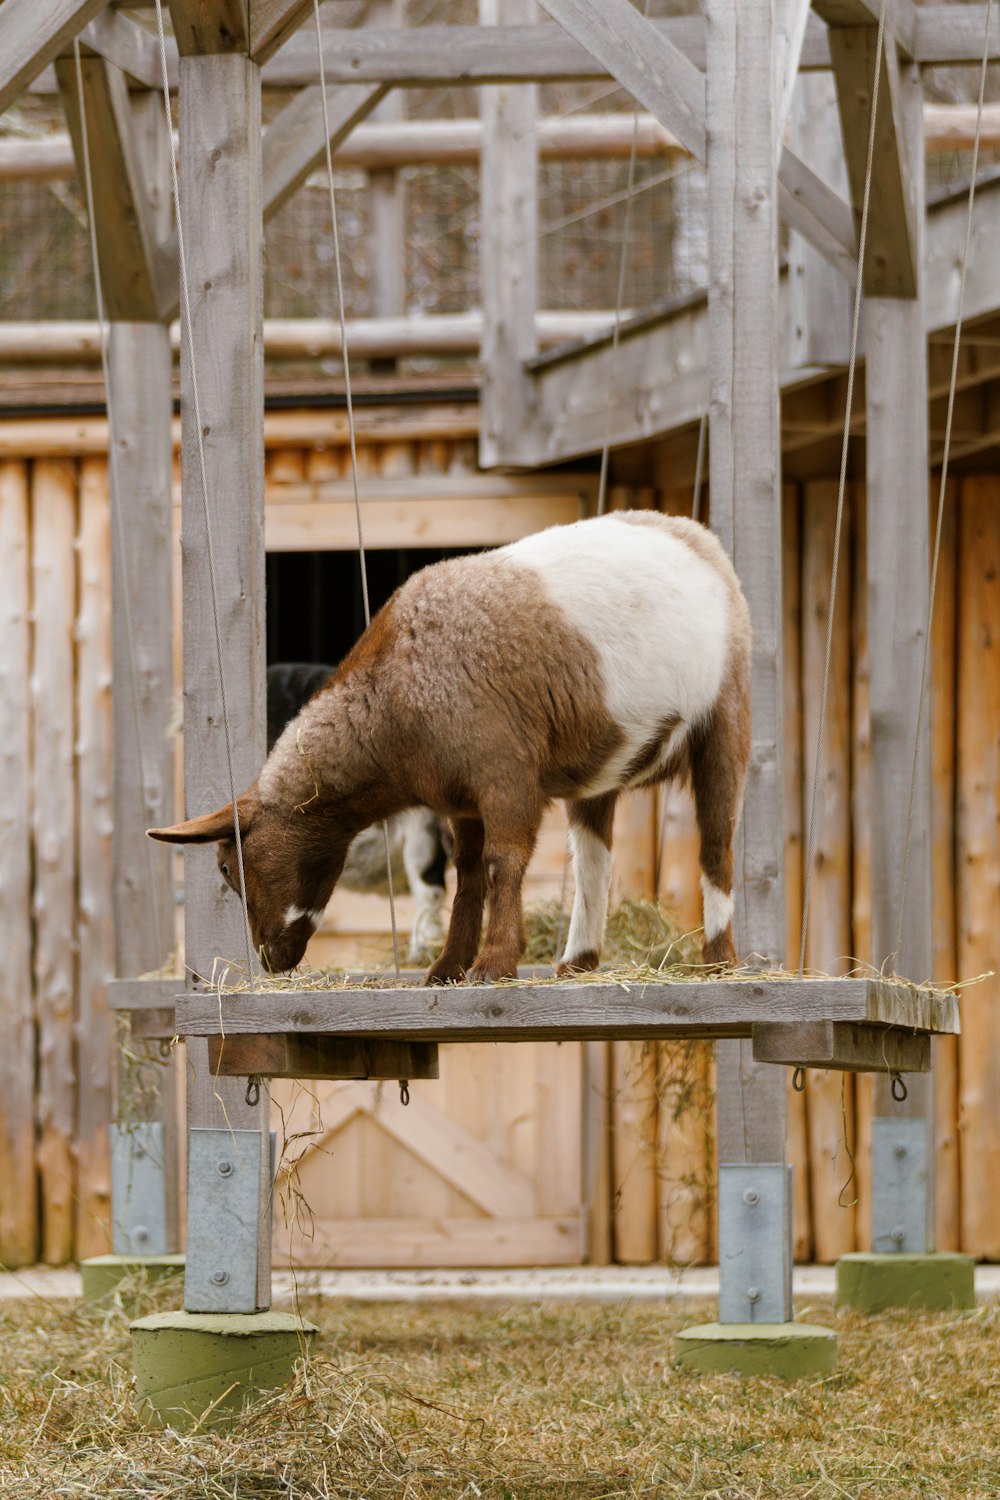 a goat eating hay on a wooden platform